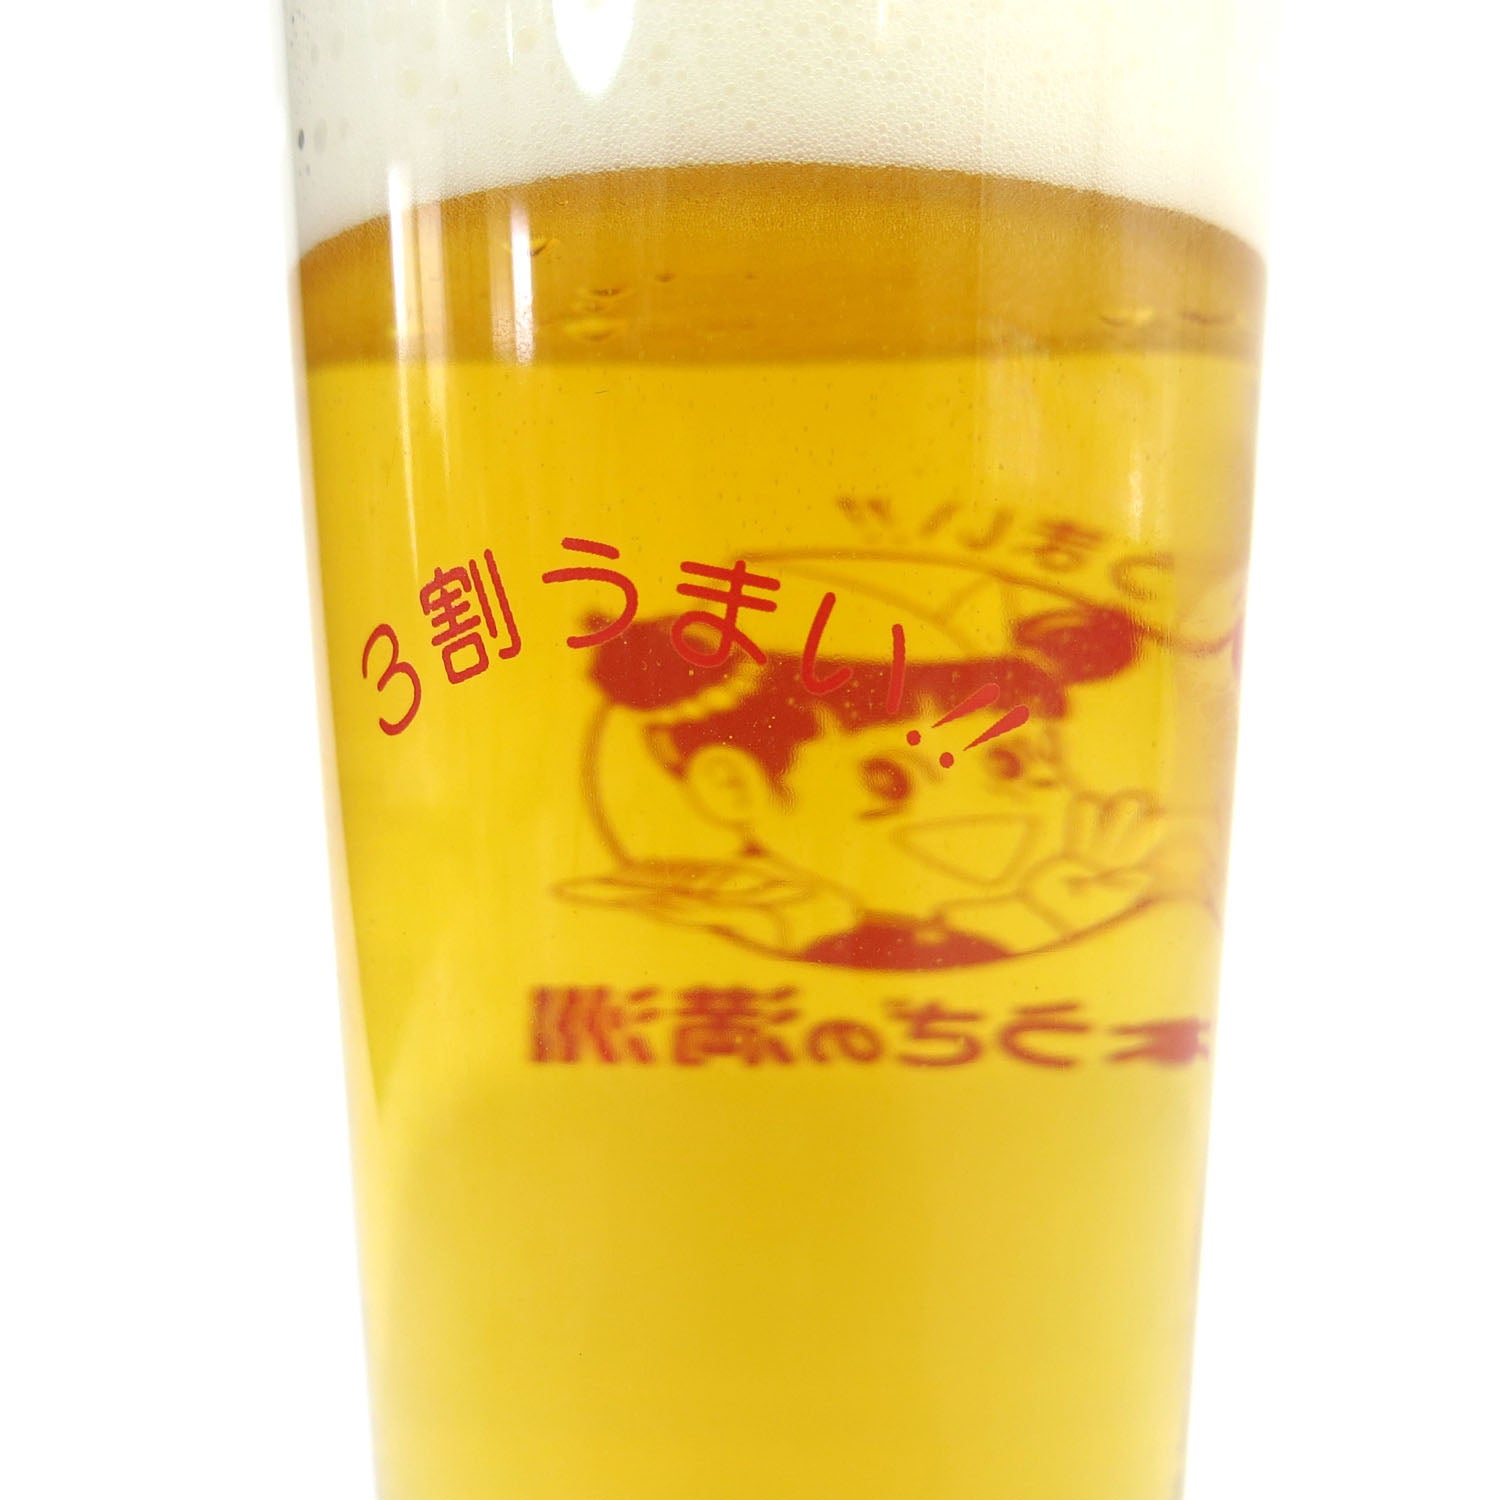 Gyoza Manchuria Beer Glass